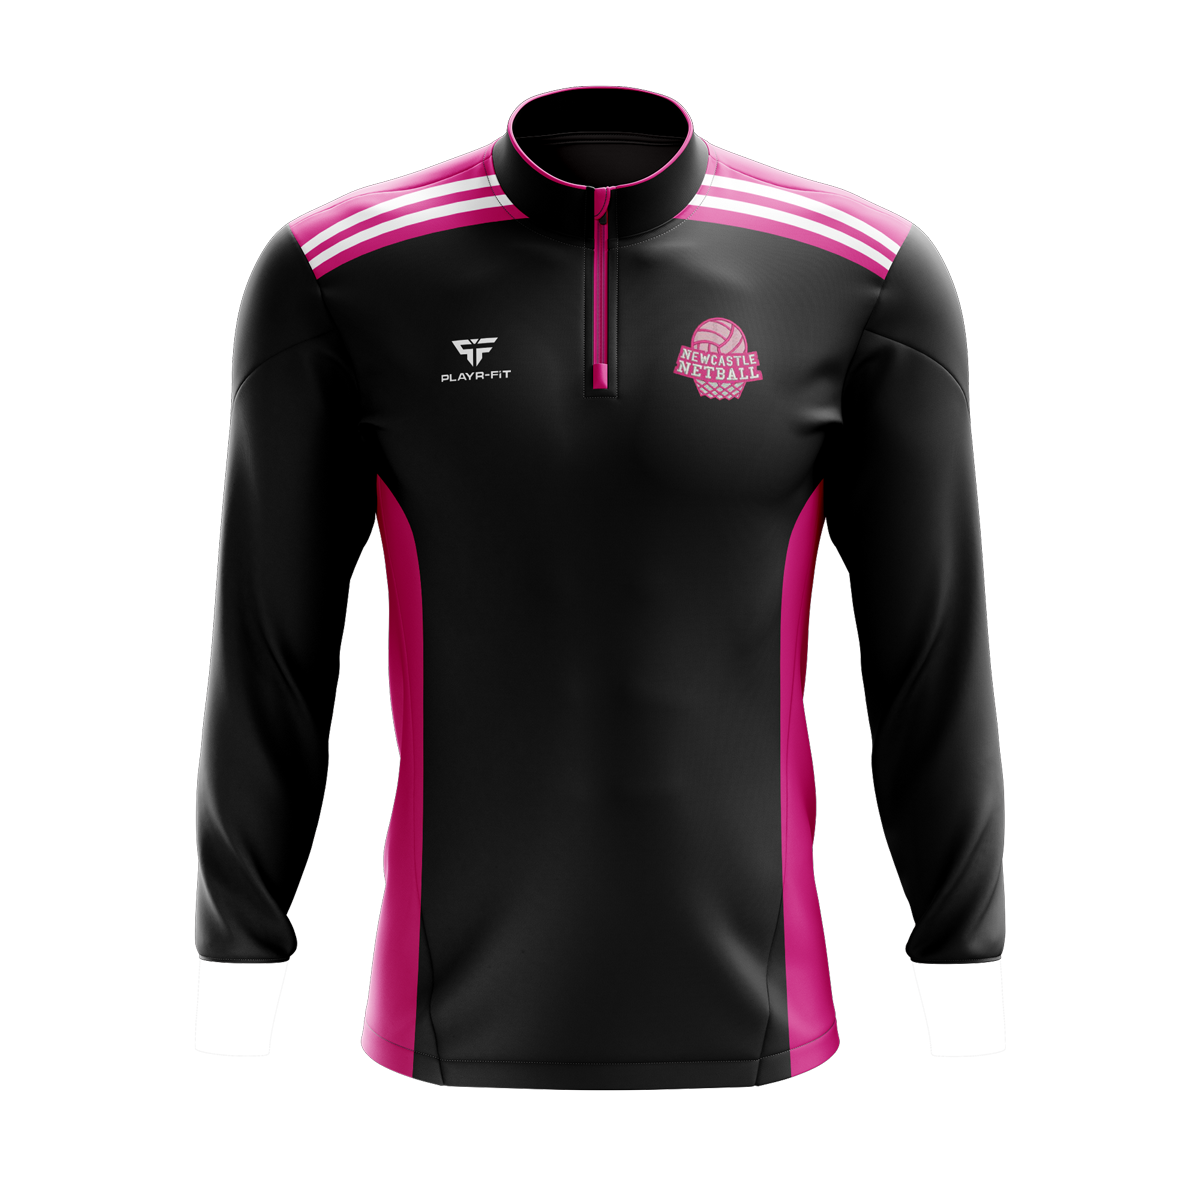 Netball Teamwear - PLAYR-FIT - Ireland & UK